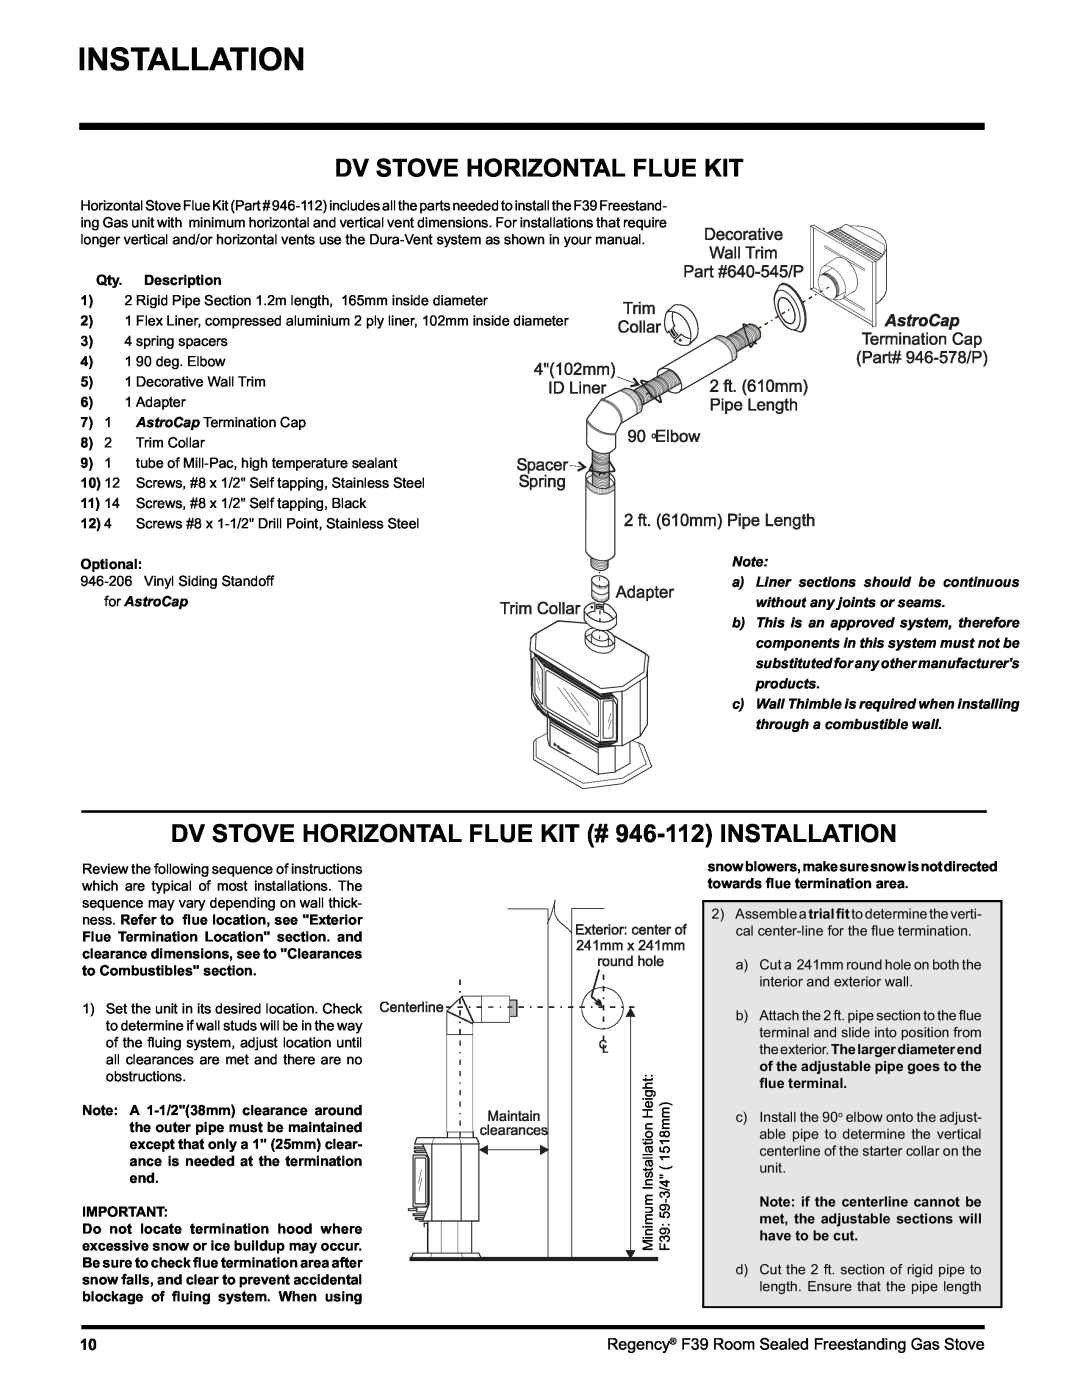 Regency F39-NG, F39-LPG installation manual Dv Stove Horizontal Flue Kit, Installation, Qty. Description, Optional 